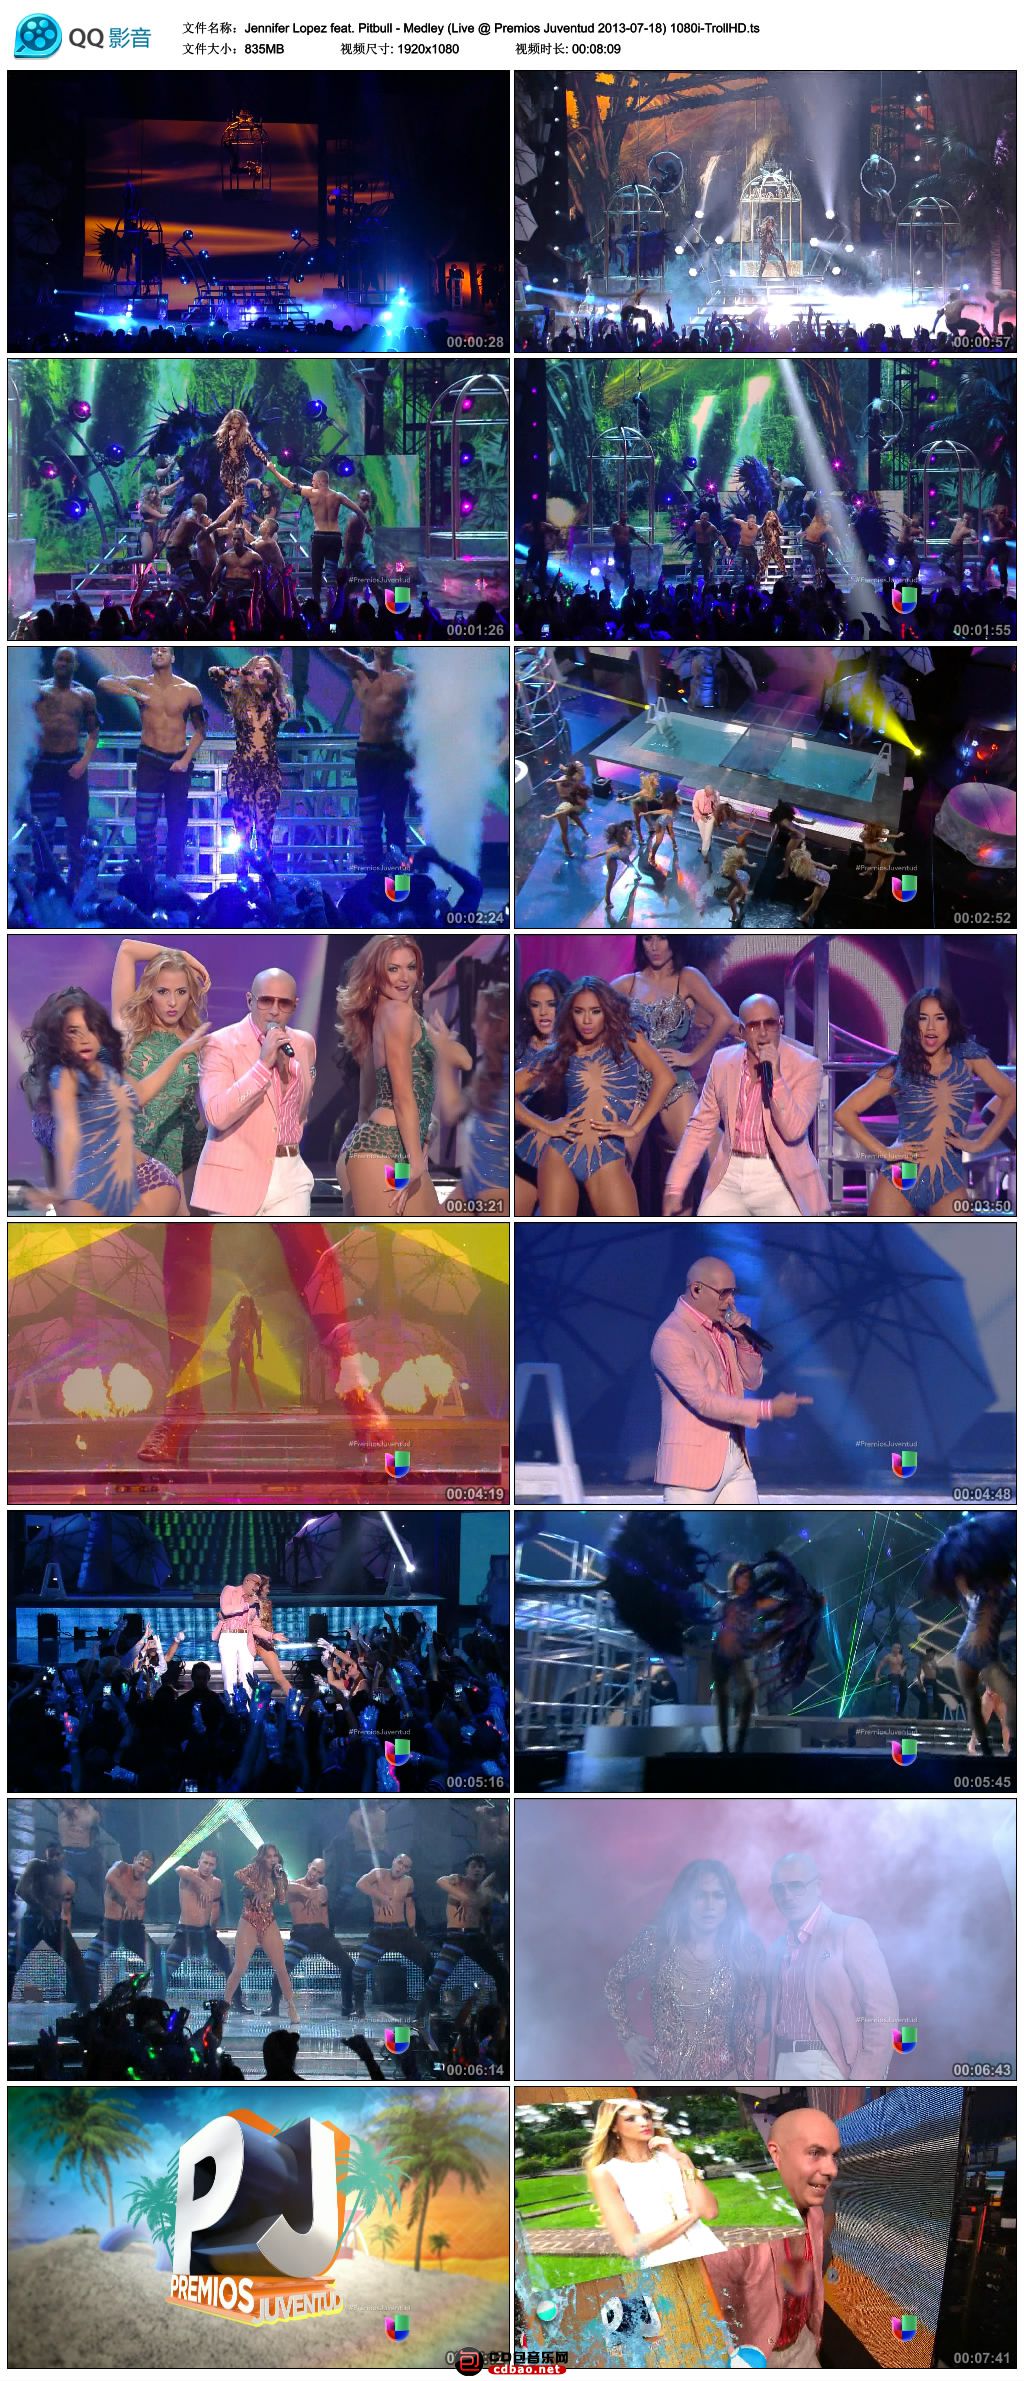 Jennifer Lopez feat. Pitbull - Medley (Live @ Premios Juventud 2013-07-18) 1080i.jpg